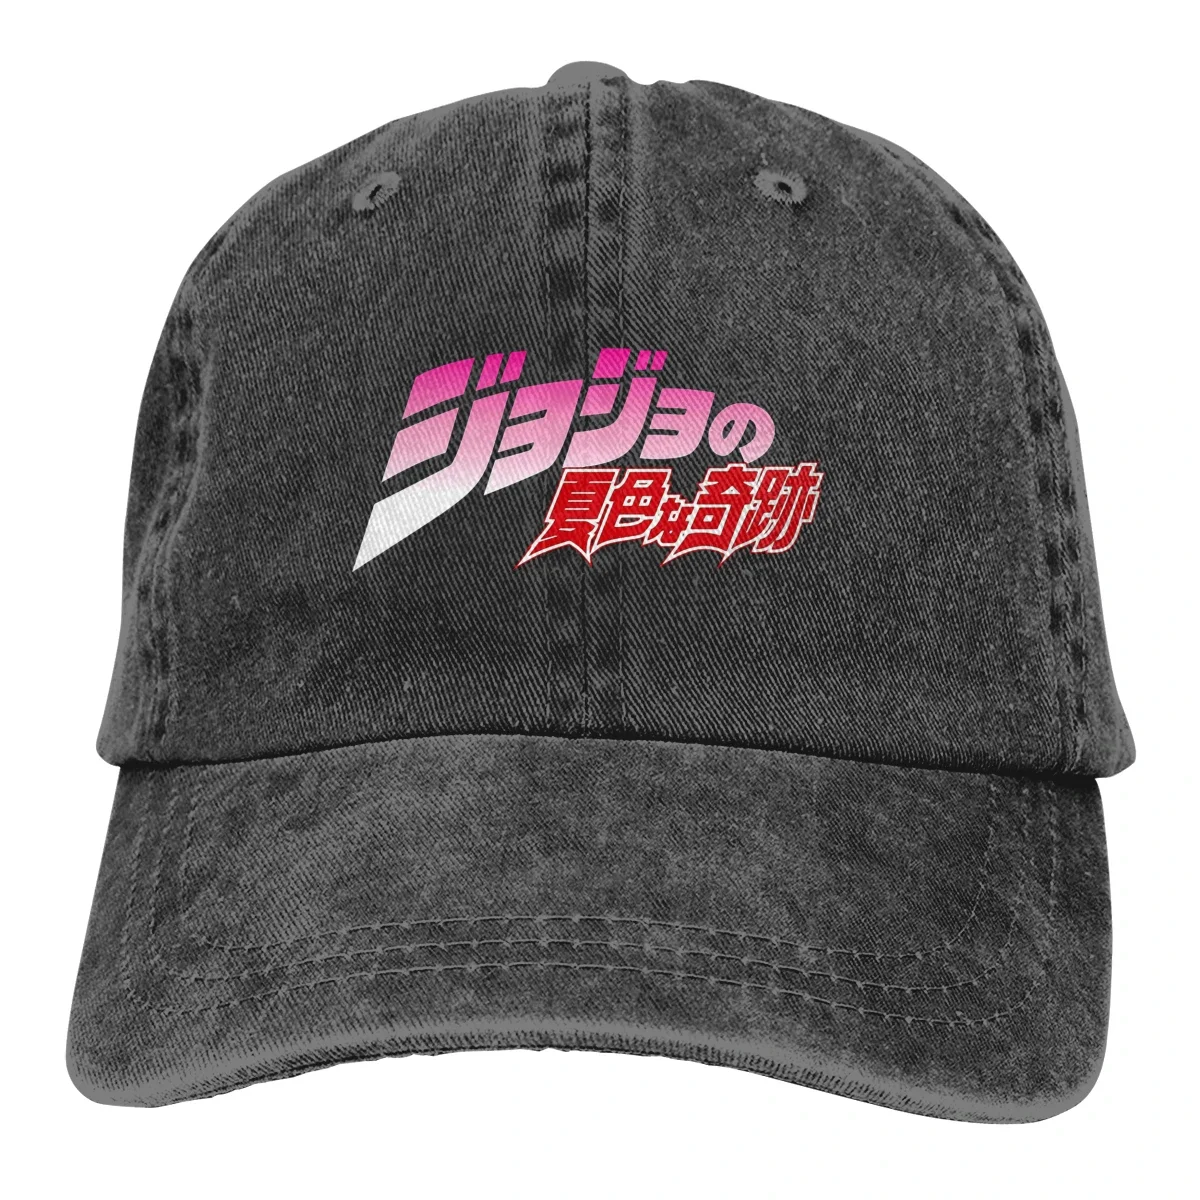 

Hot Japanese Anime JoJo's Bizarre Adventure Baseball Cap Fashion Casual Funny cowboy hat Peaked cap jojo bizarre adventure Hats